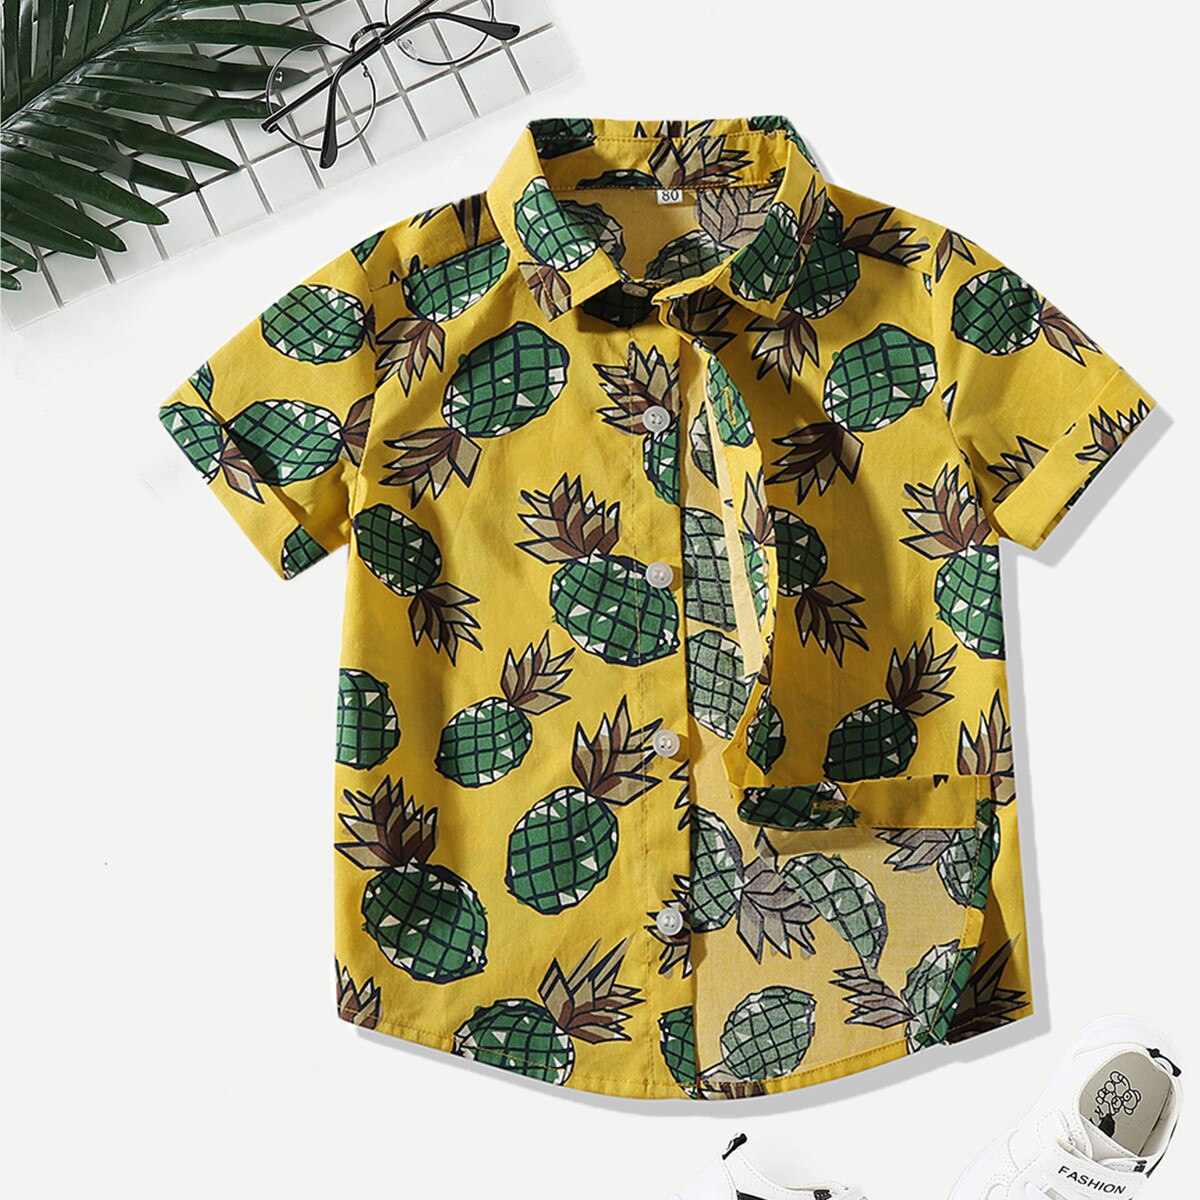 Toddle baby drenge ananas mønster skjorte drenges sommer kortærmet revers enkelt-breasted top 0-3y